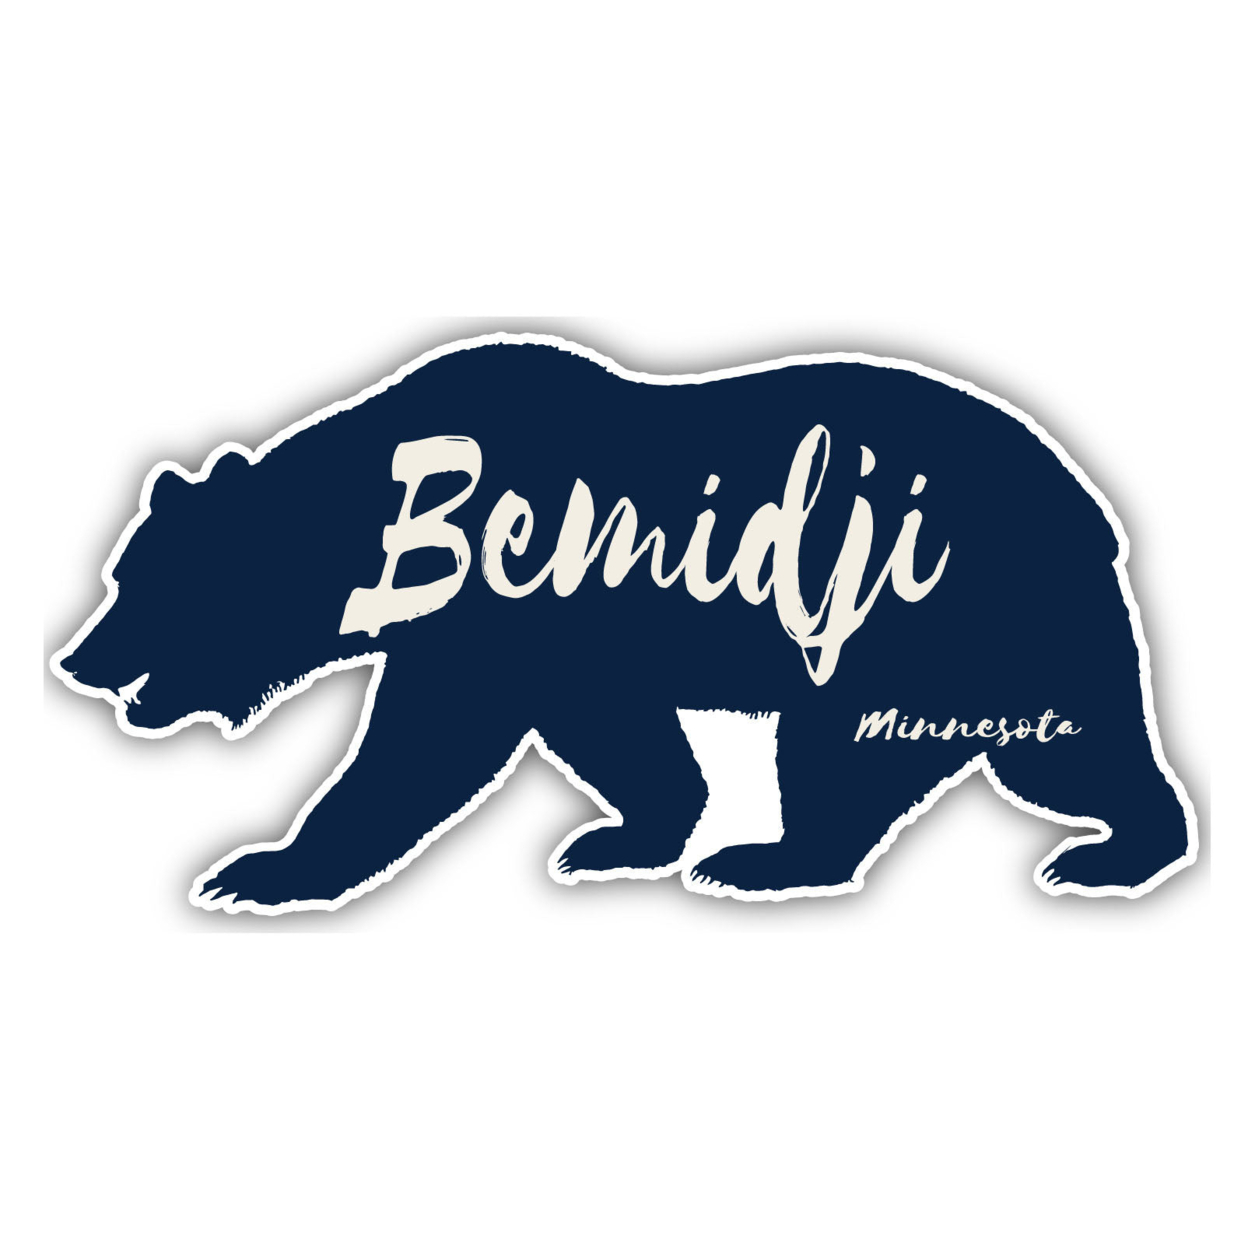 Bemidji Minnesota Souvenir Decorative Stickers (Choose Theme And Size) - Single Unit, 10-Inch, Tent